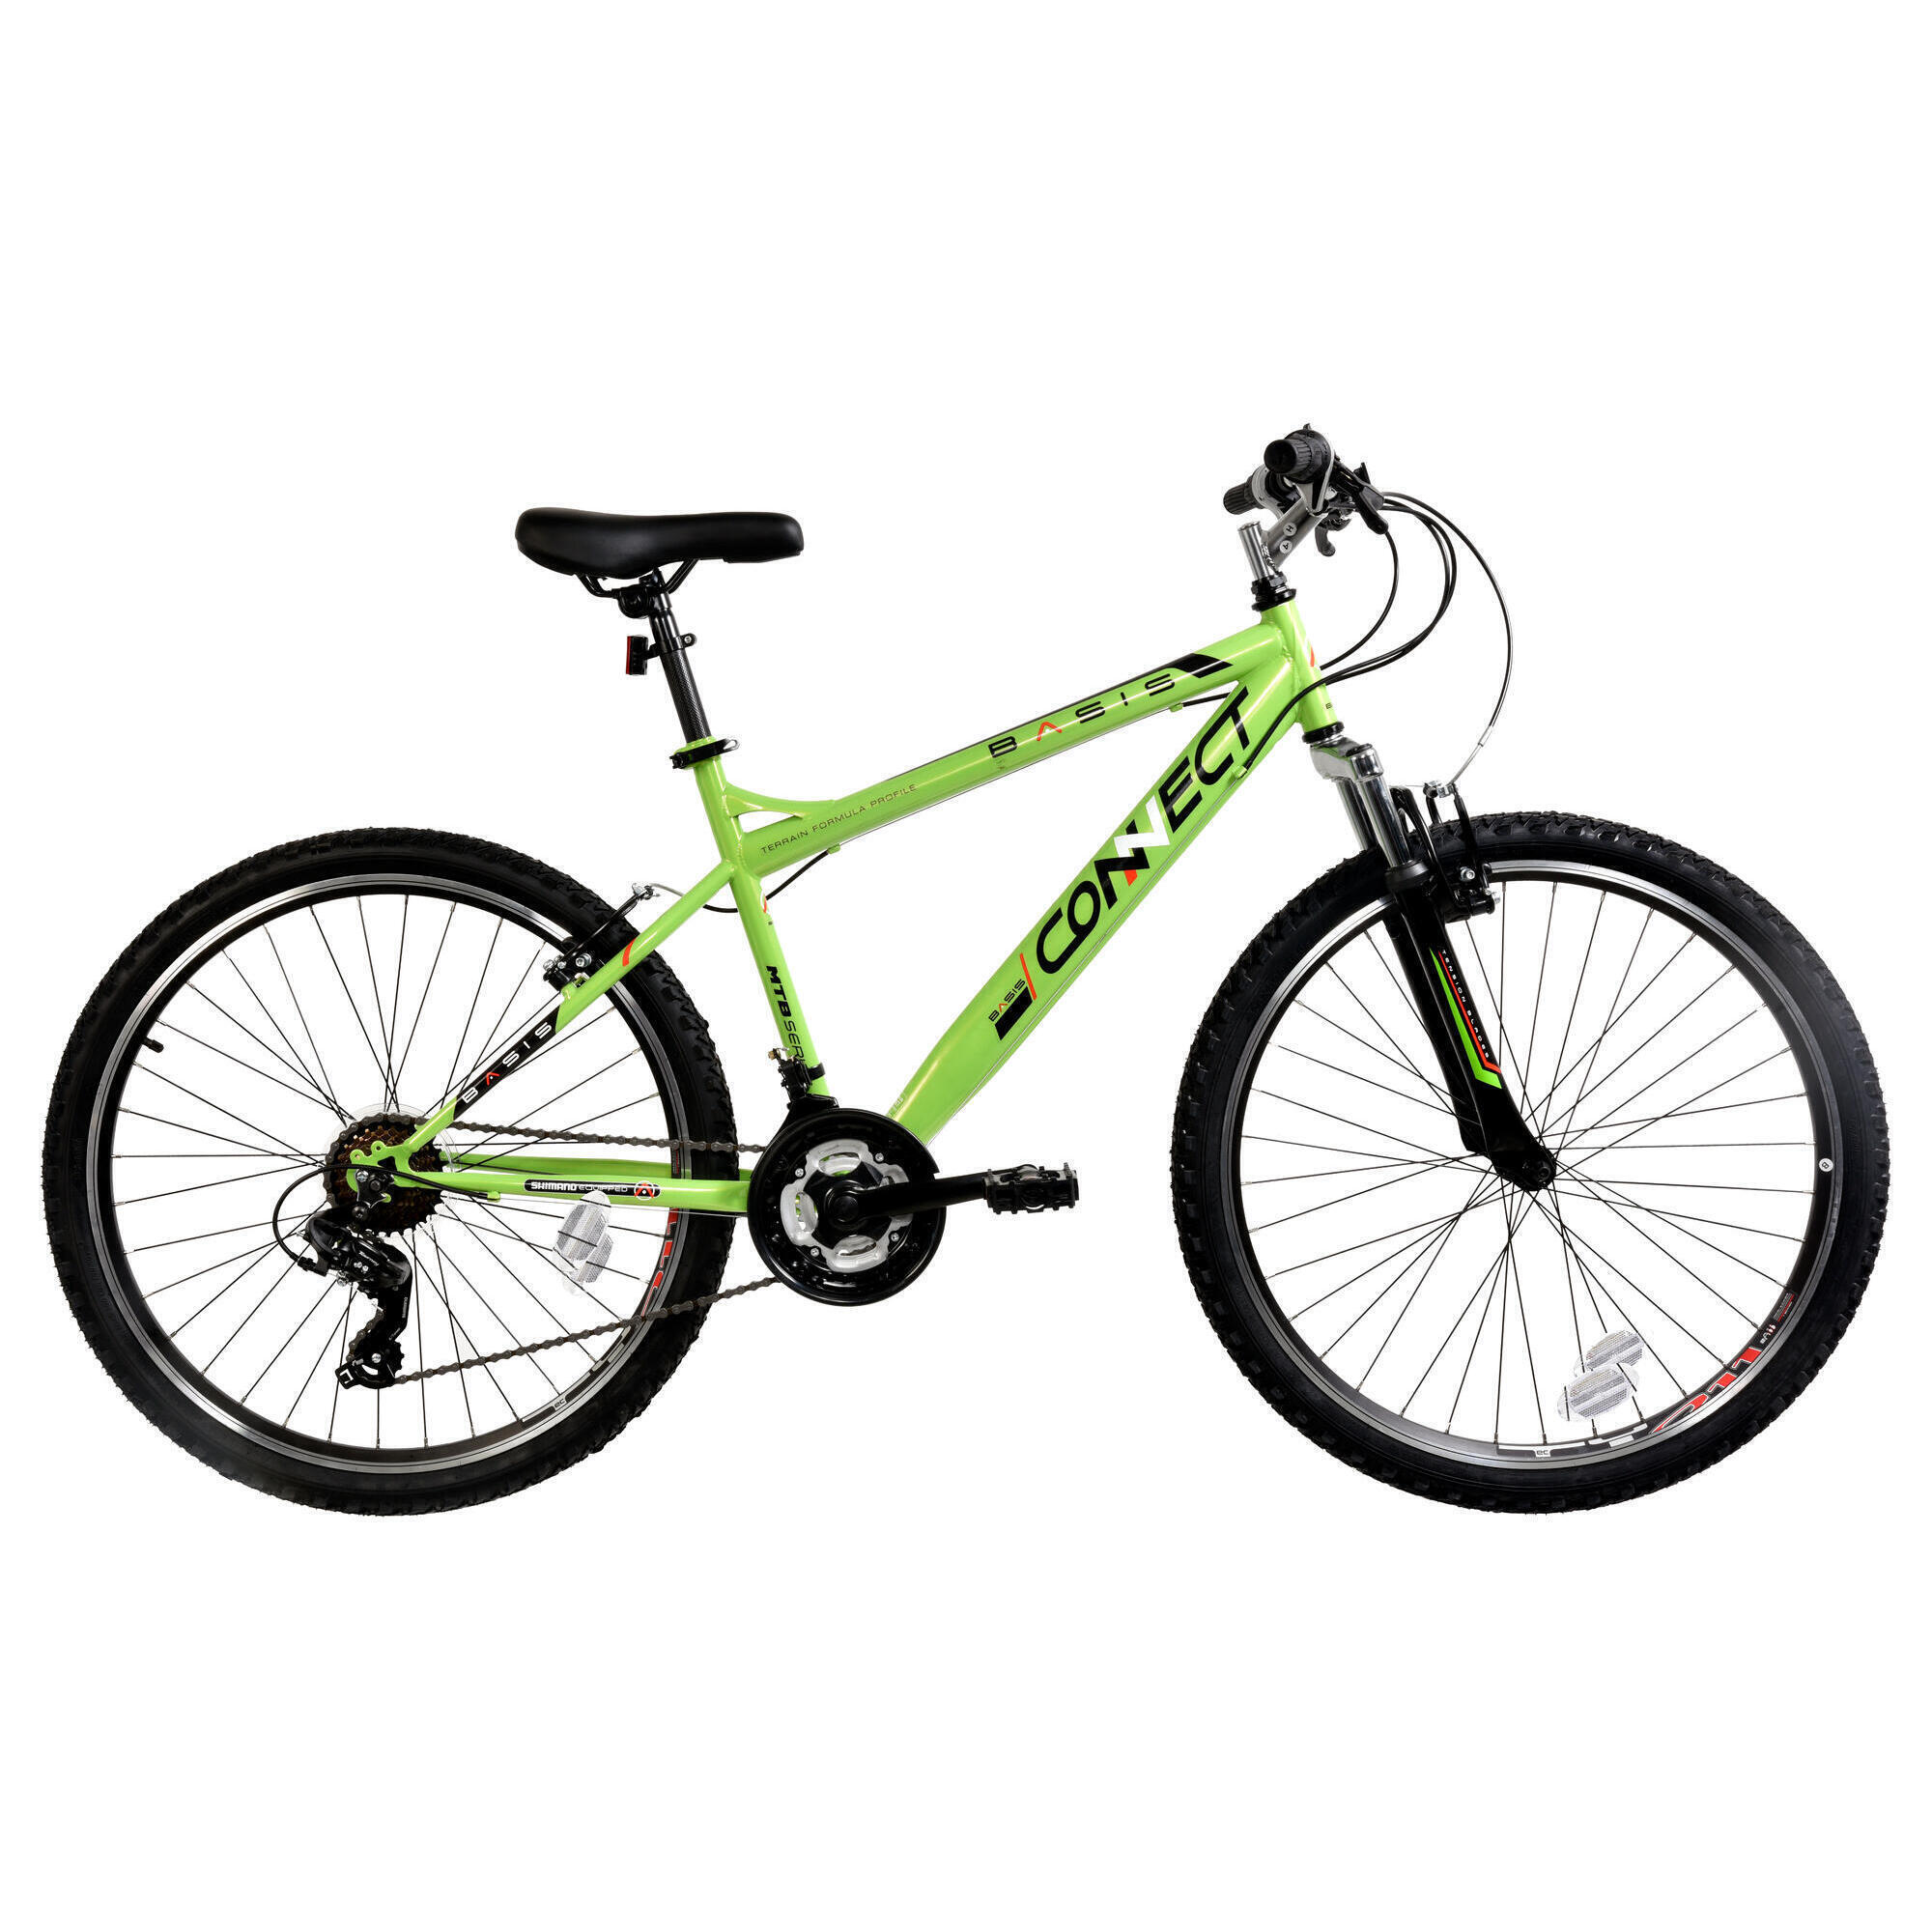 BASIS Basis Connect Adult's Hardtail Mountain Bike, 26In Wheel - Green/Black